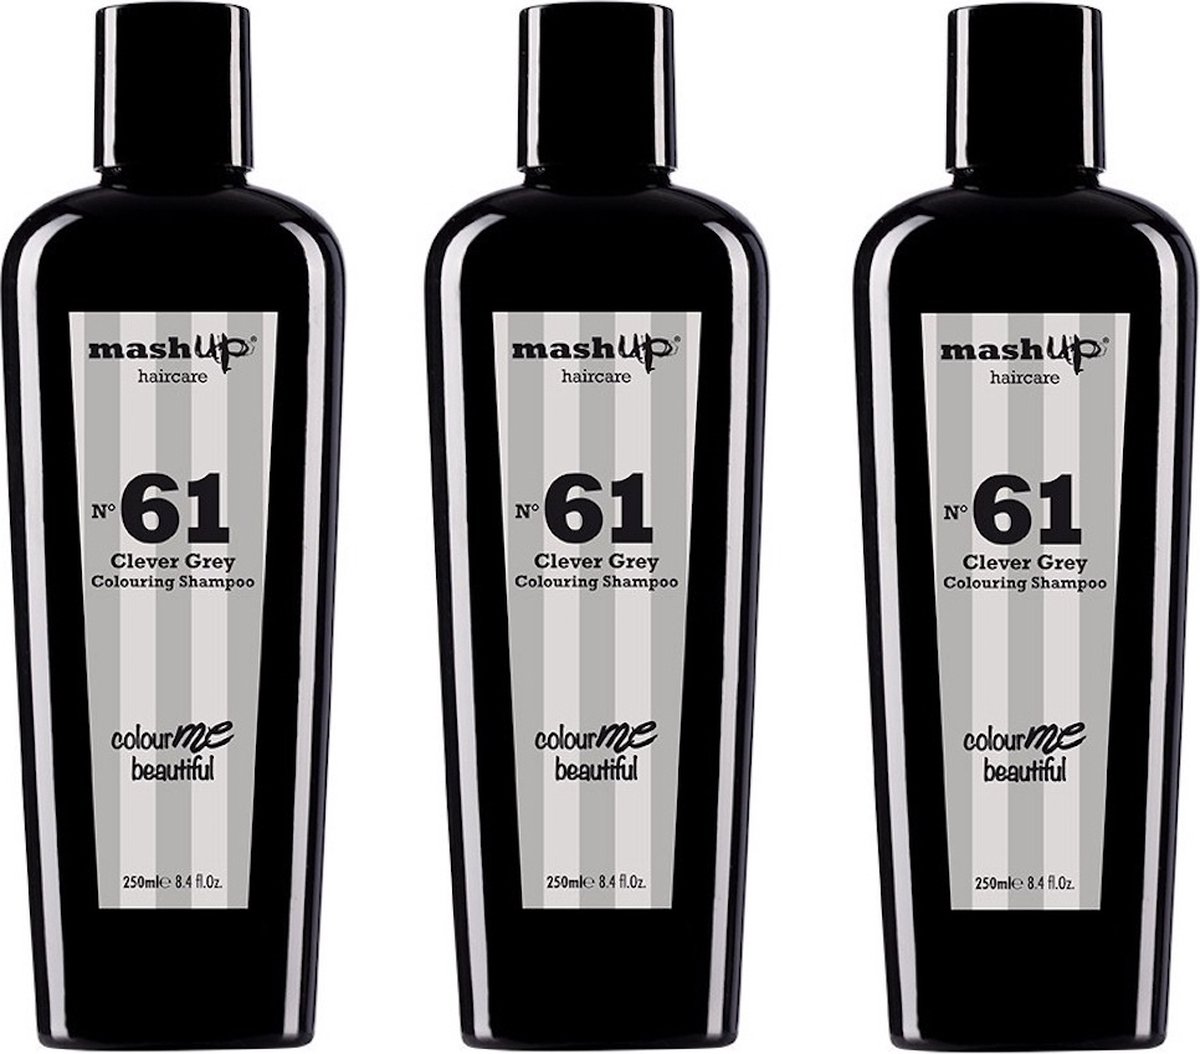 mashUp haircare Colour Me Beautiful N° 61 Clever Grey Colouring Shampoo 250ml - 3 stuks